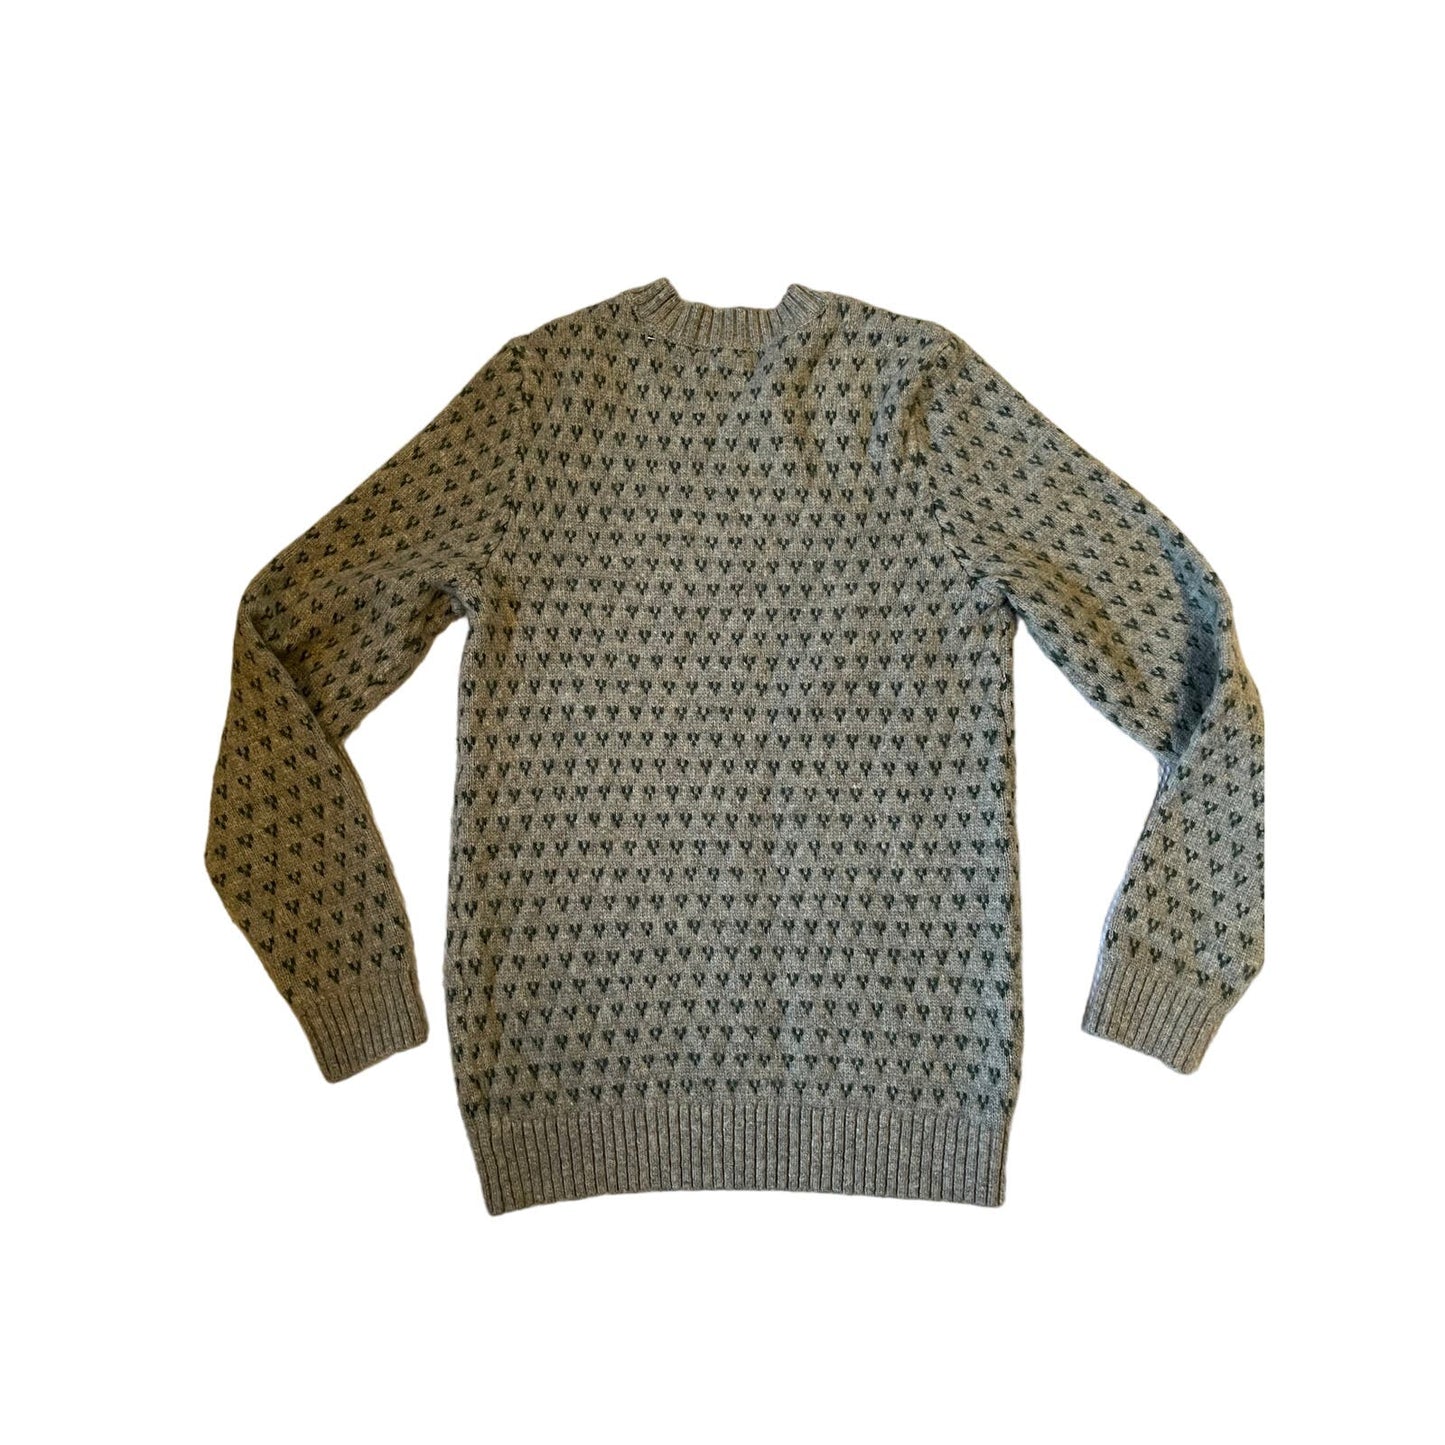 UpWest Acrylic Wool Long Sleeve Gray & Green Birds Eye Knit Sweater Mens Size XS